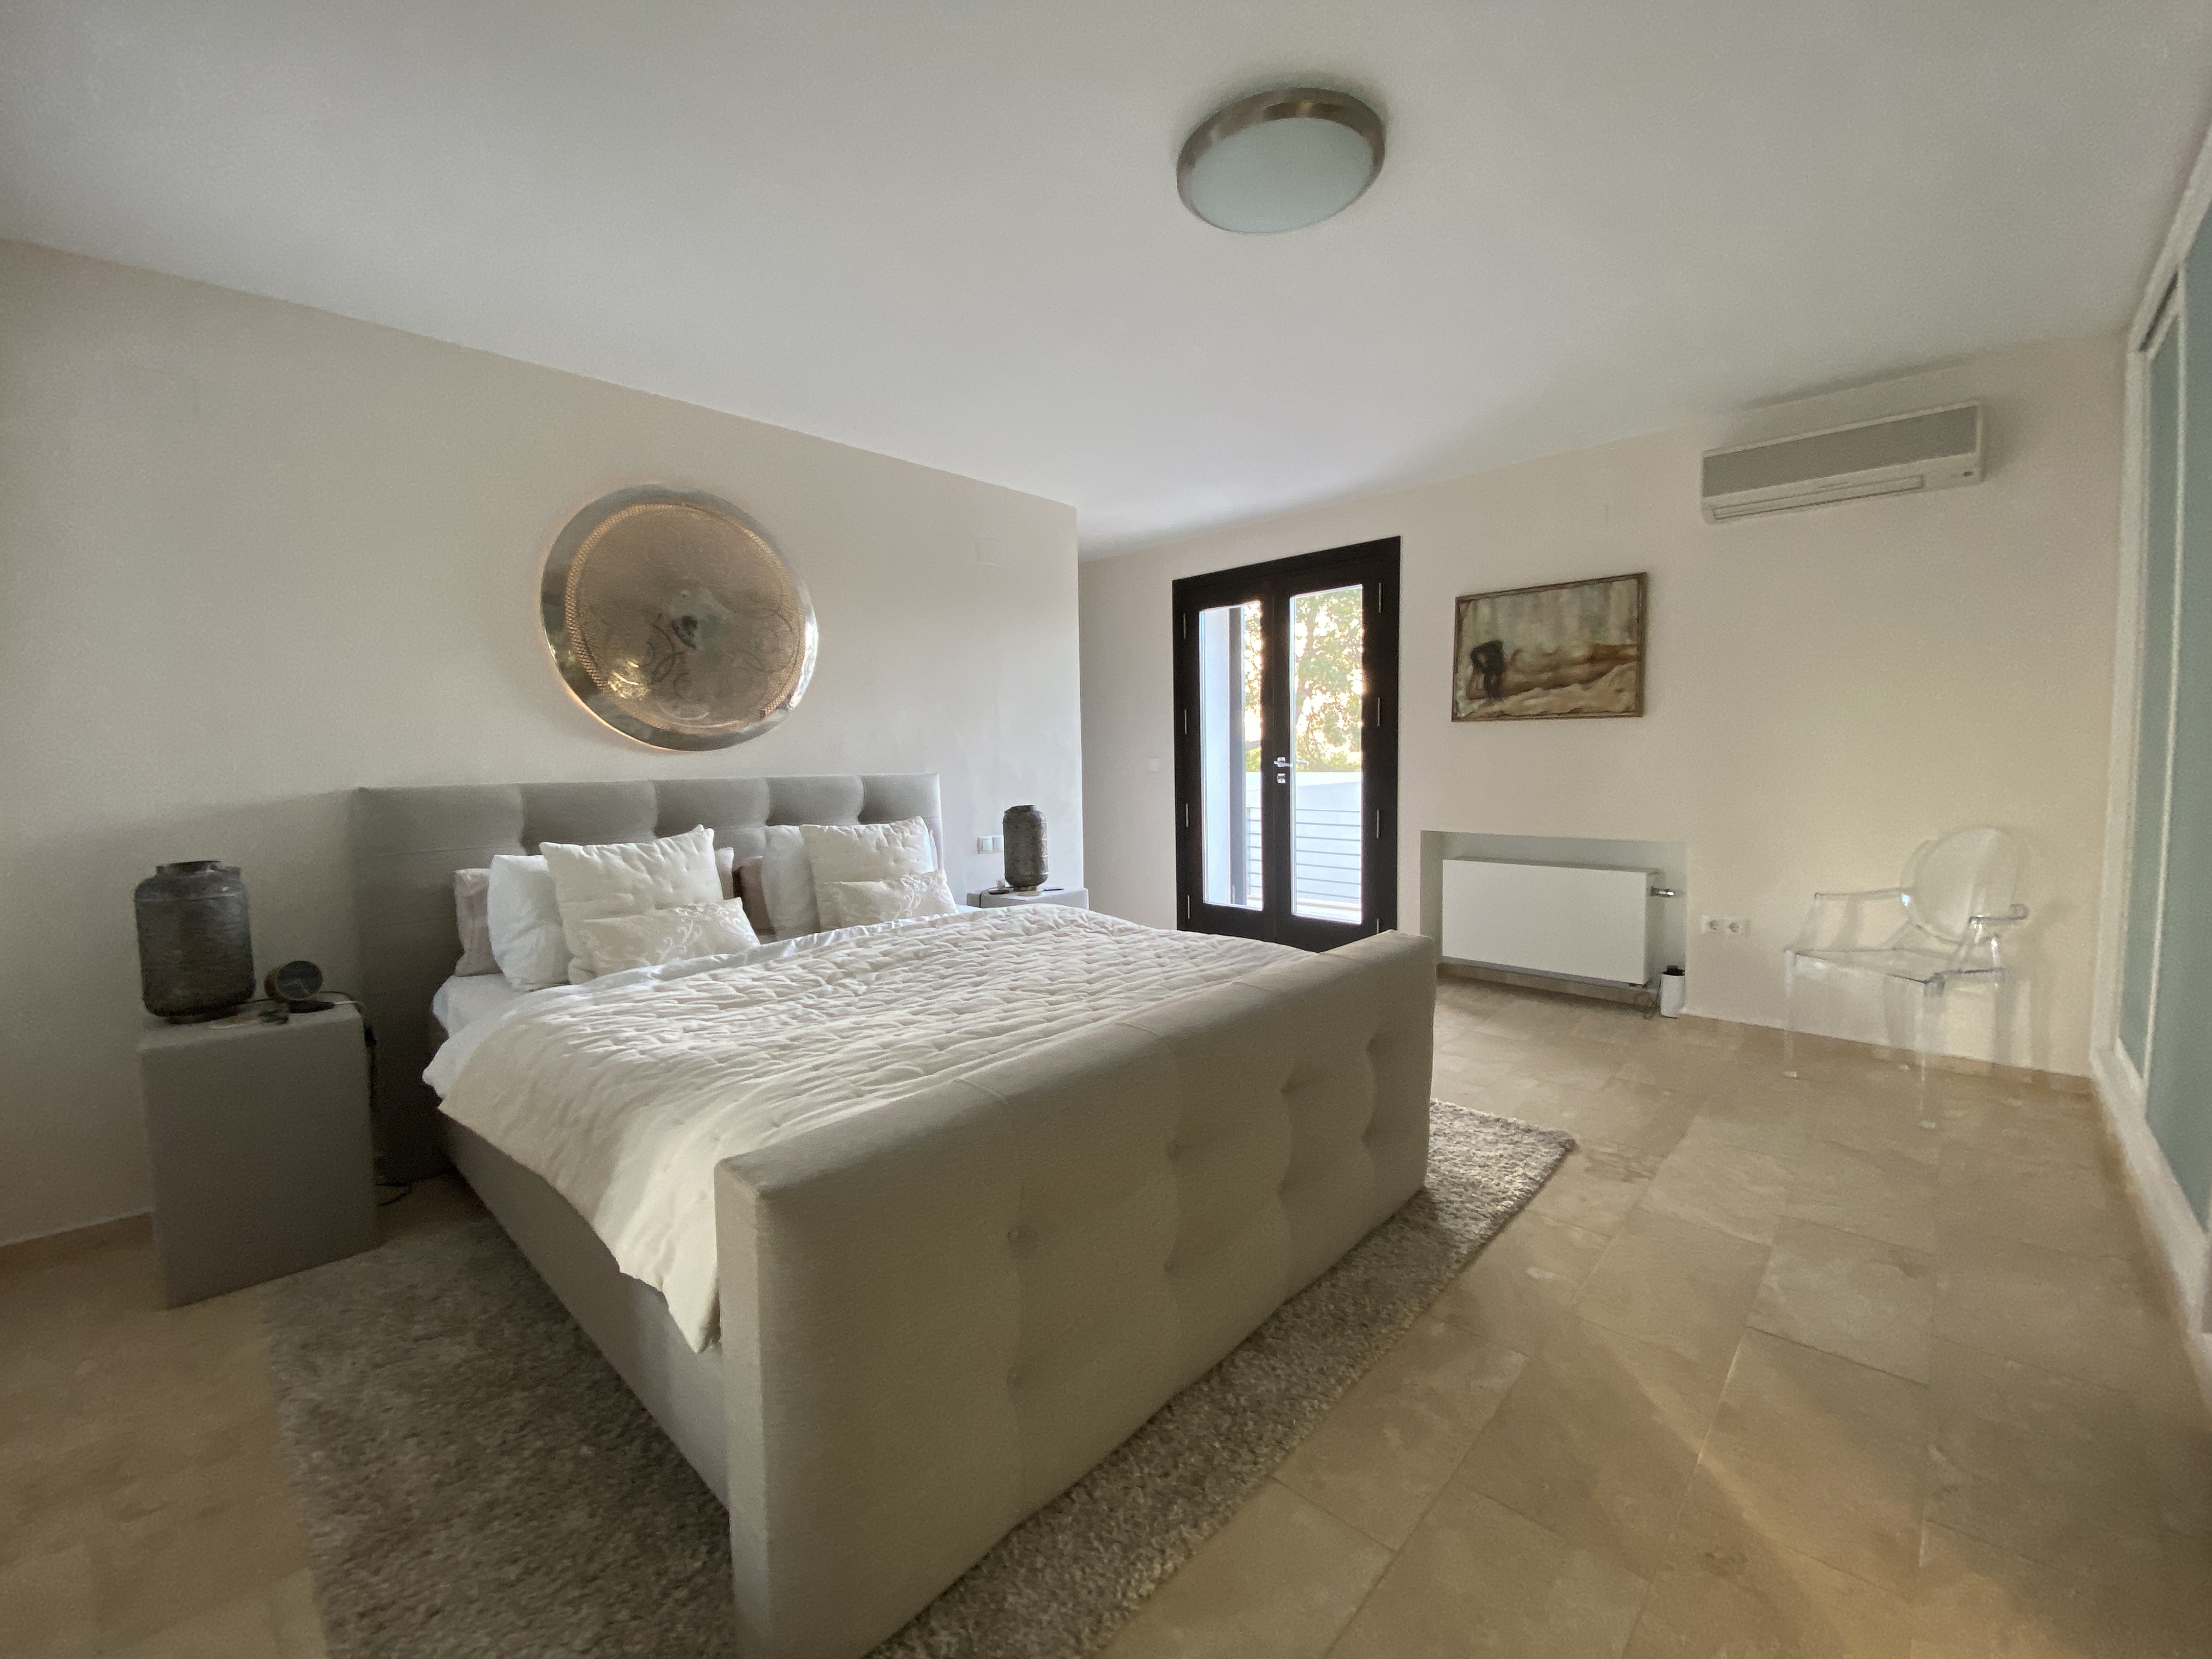 5 Bedroom Villa in Javea For Sale